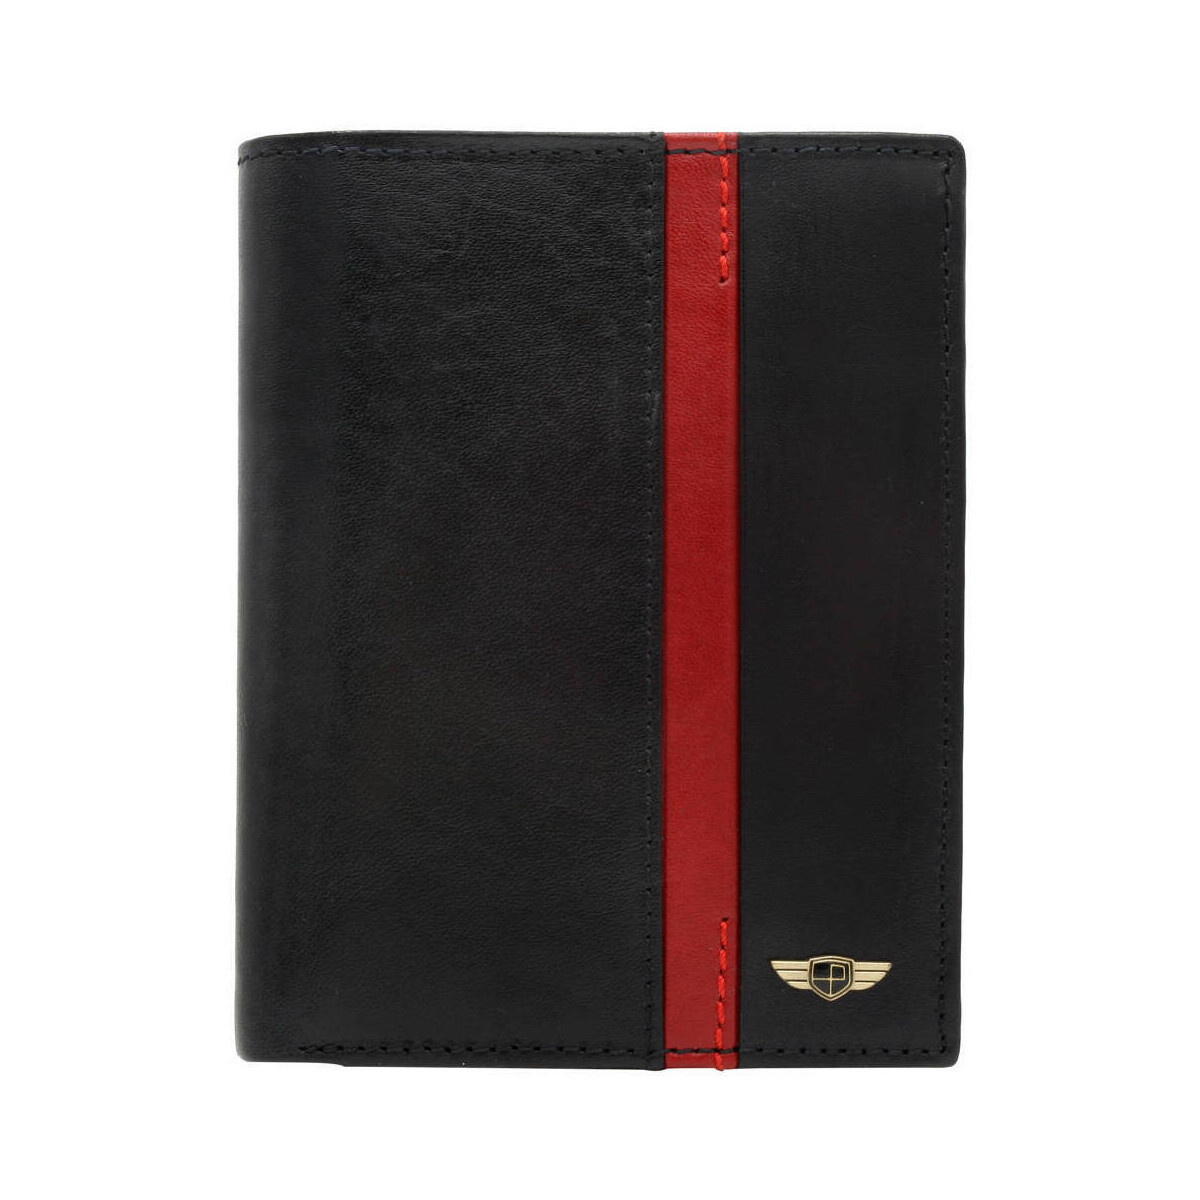 Peterson  Pánská peněženka Eekoyo černo-červená  ruznobarevne